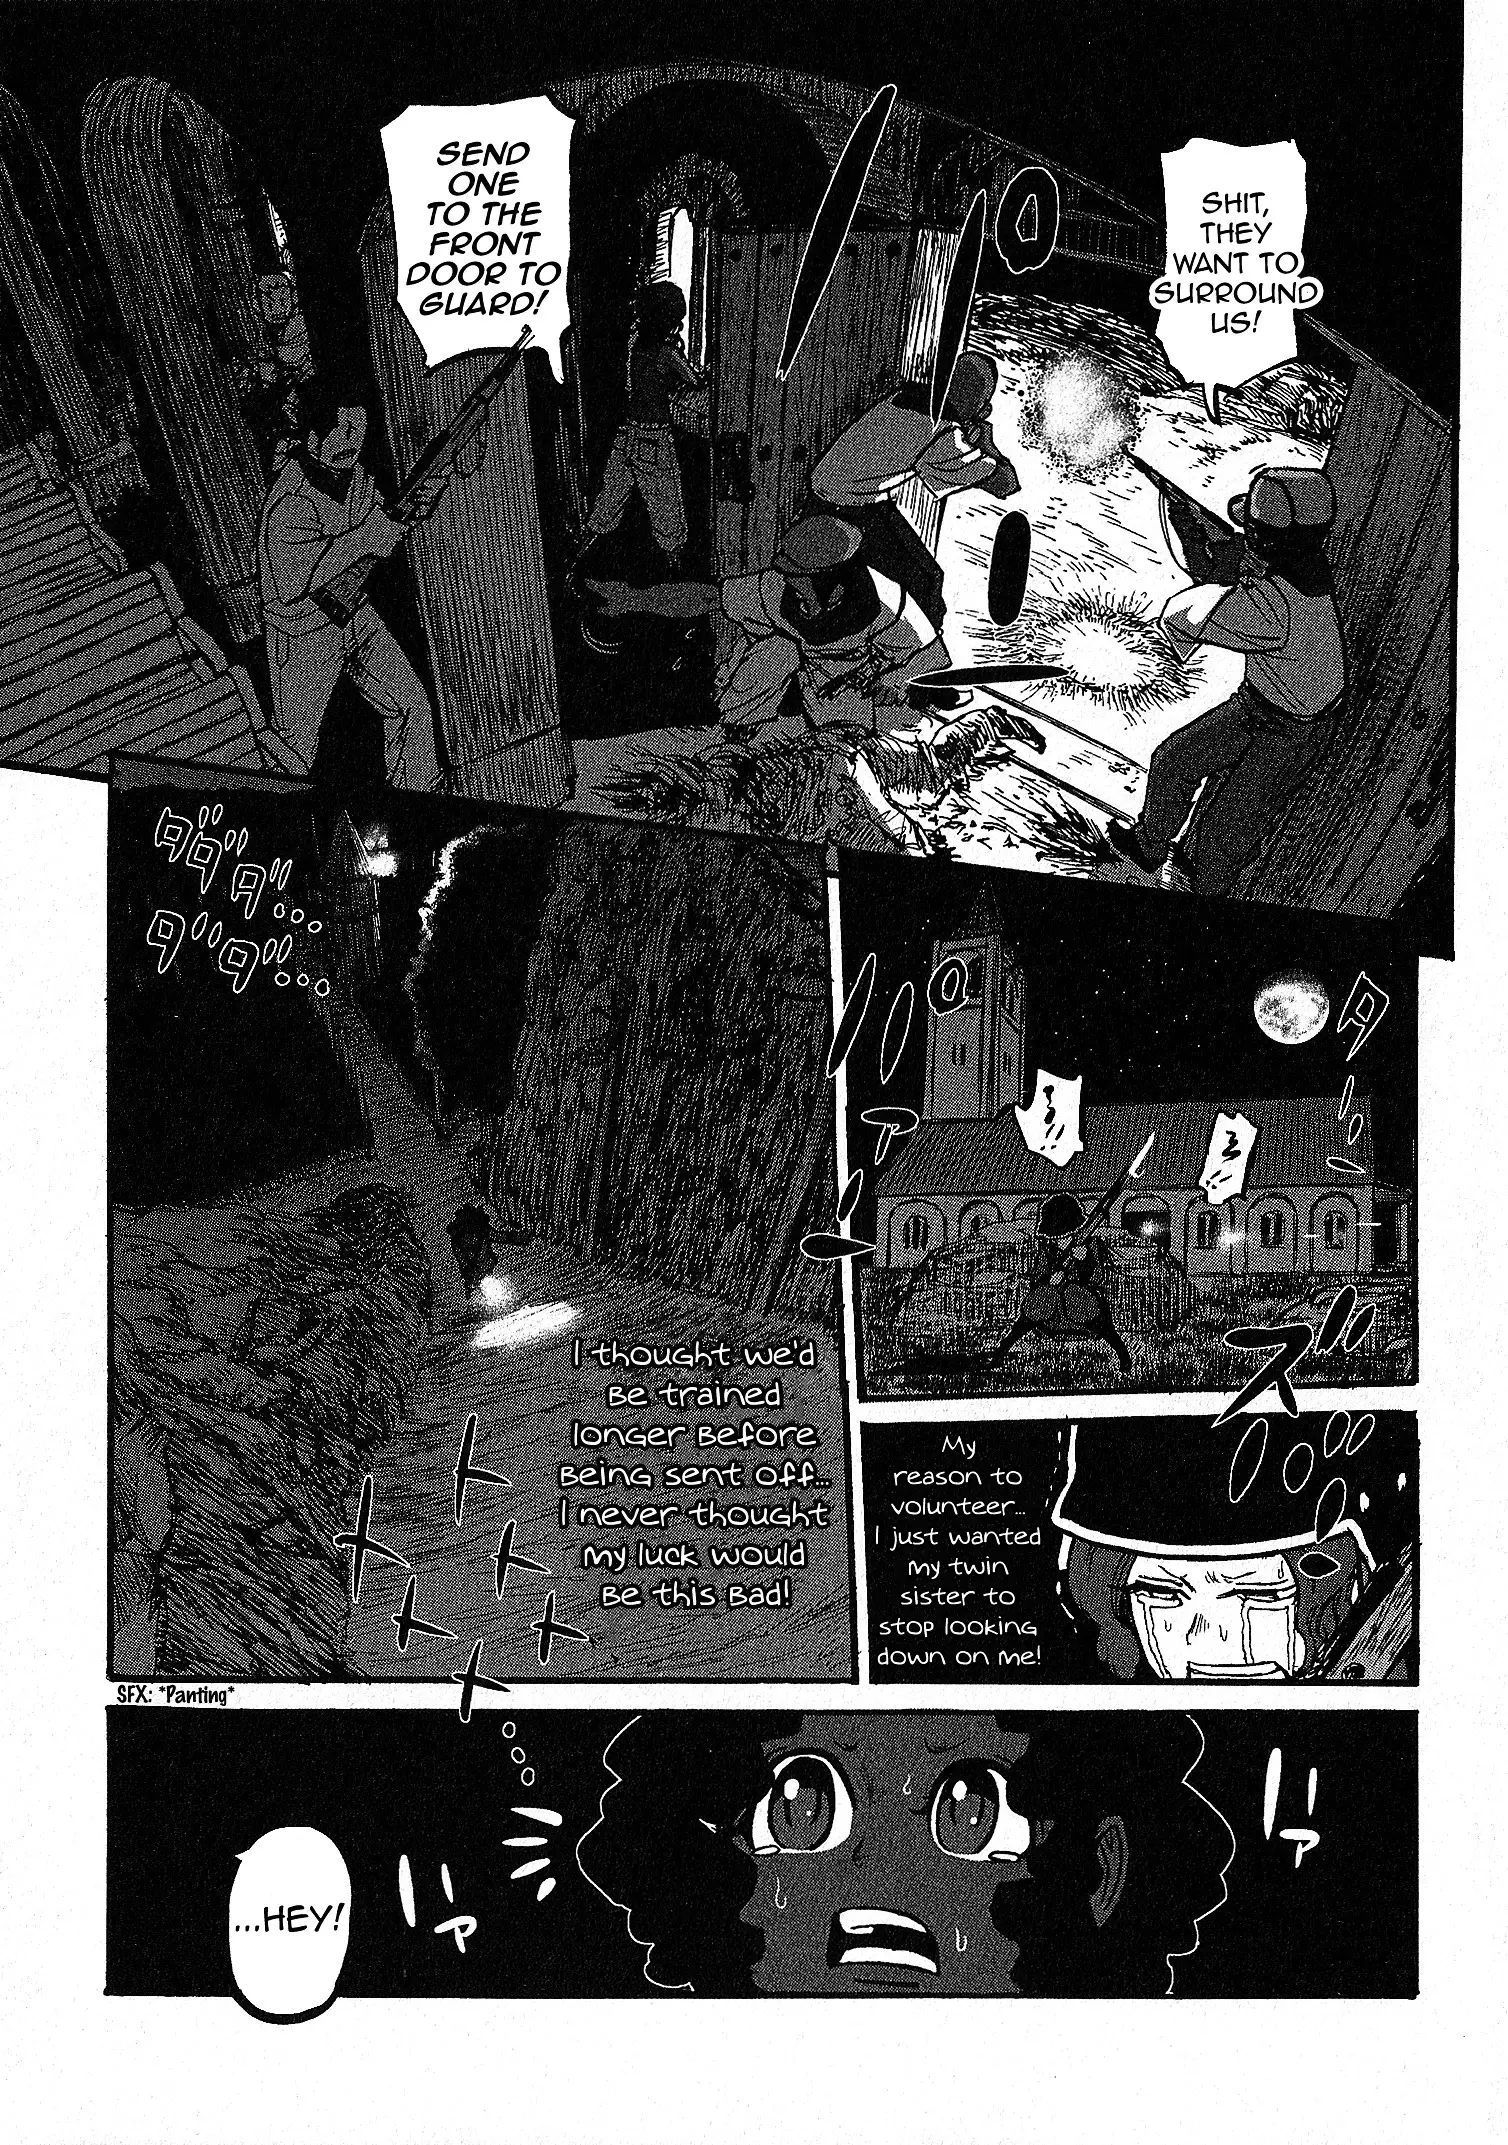 Groundless - Sekigan No Sogekihei - 11 page 6-43b0162a